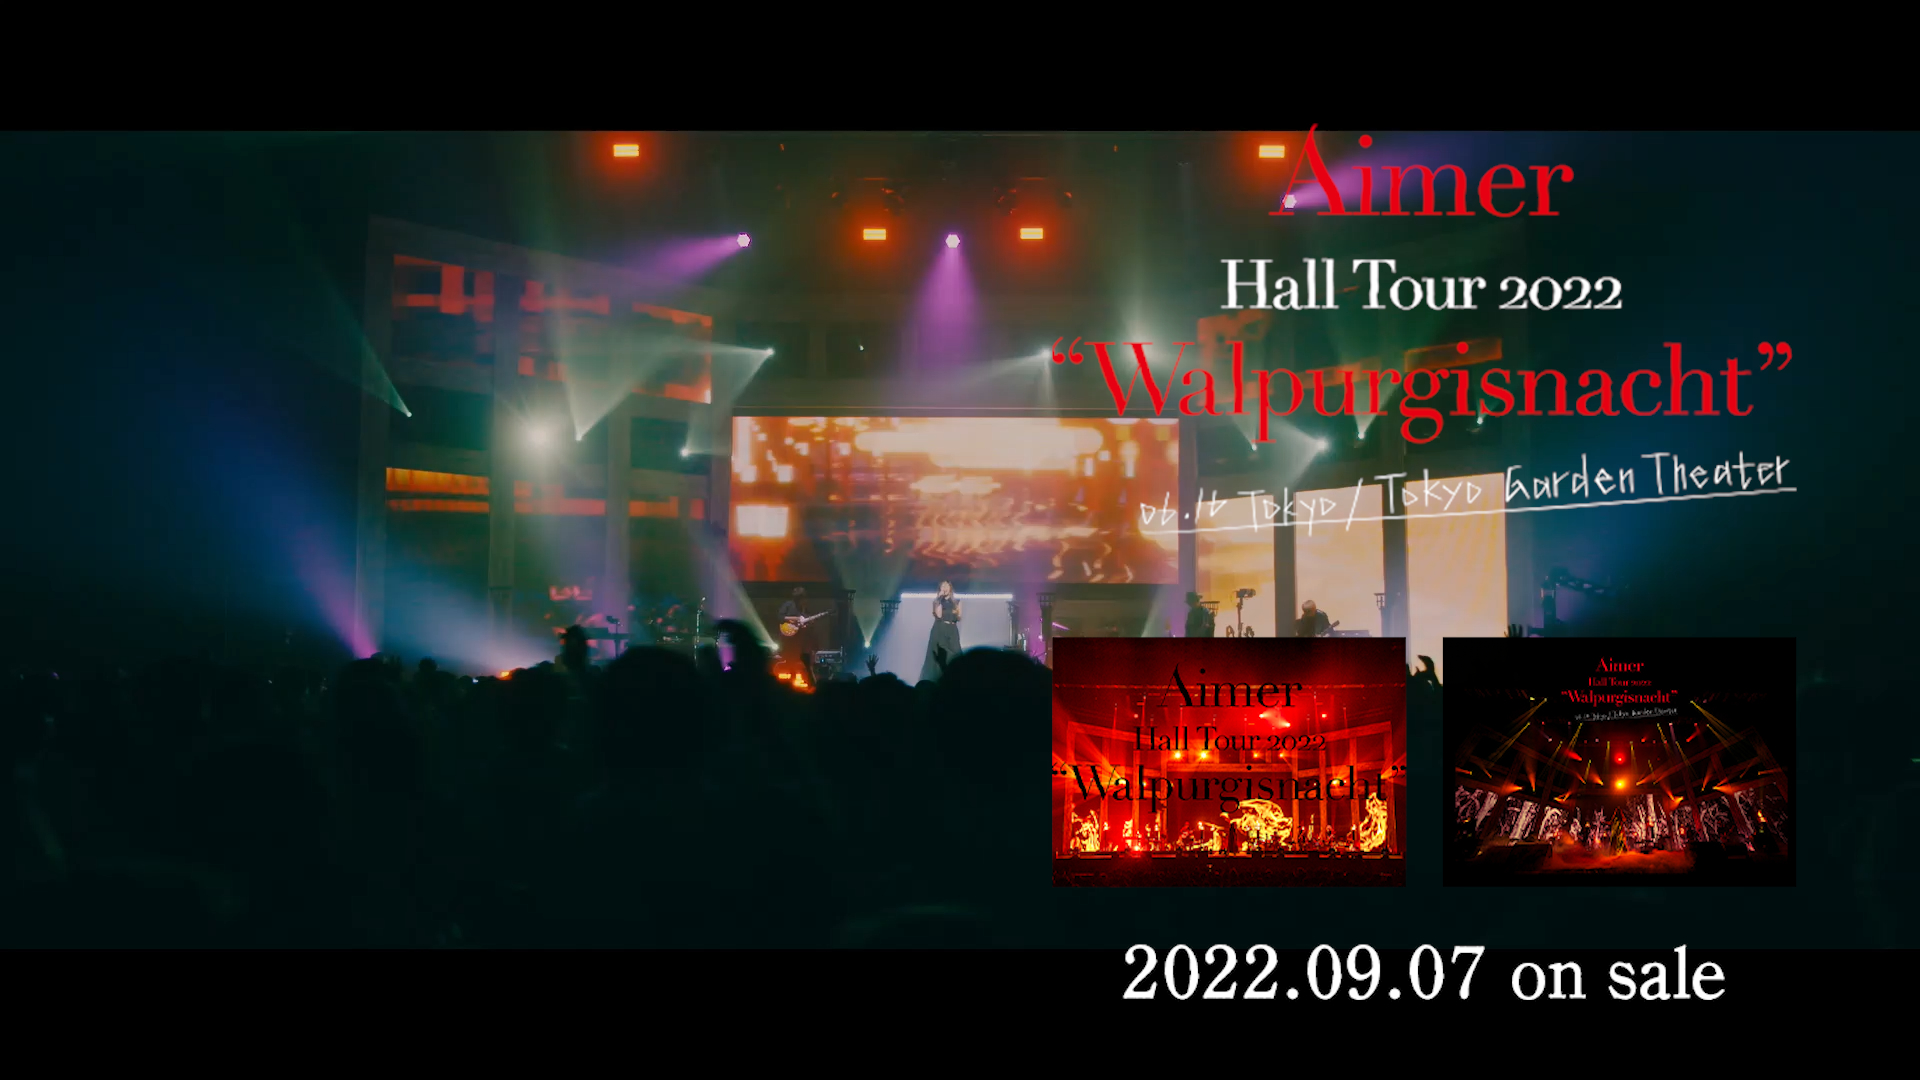 Aimerライブ映像商品『Aimer Hall Tour 2022 